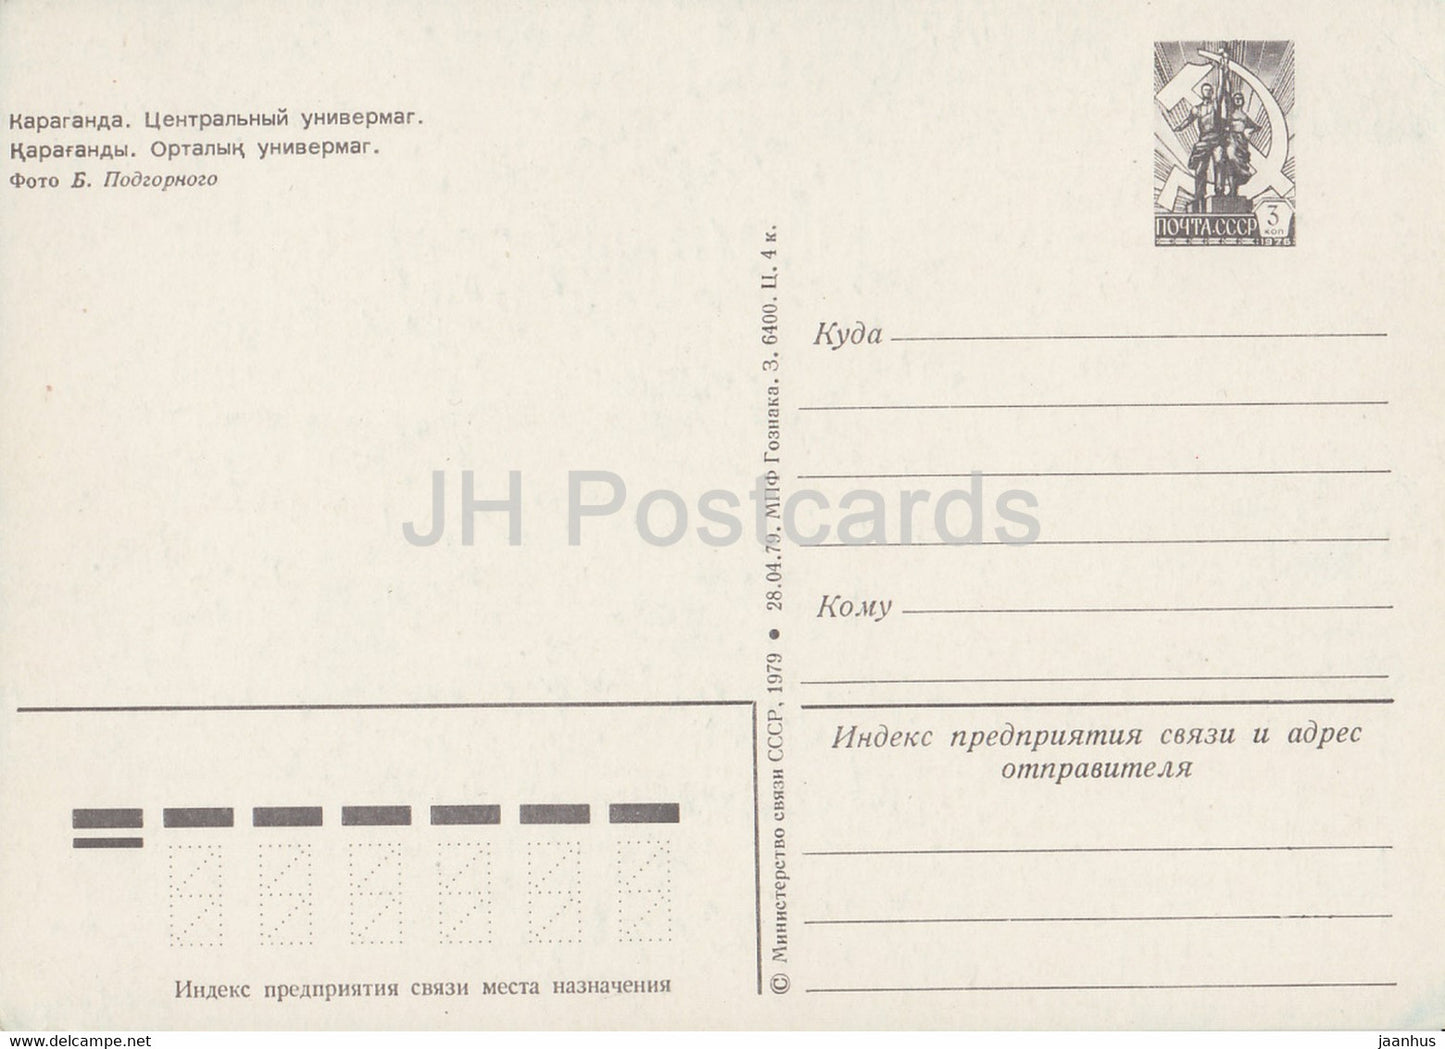 Karaganda - Karagandy - Central department store - postal stationery - 1979 - Kazakhstan USSR - unused